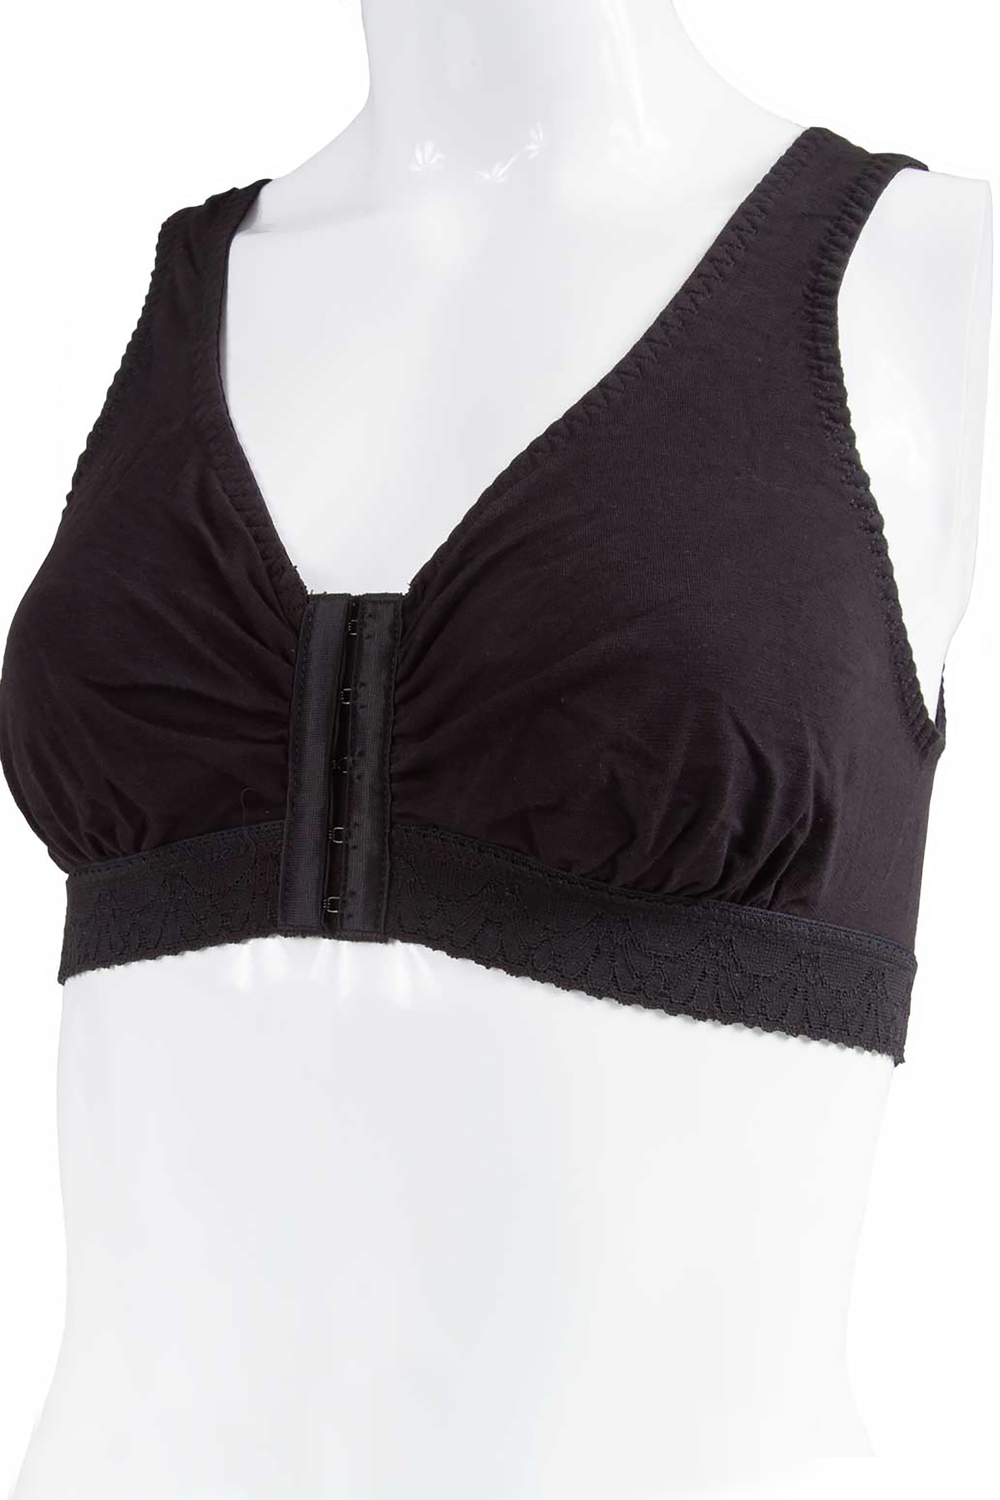 Carole Martin - Cotton Comfort bra, black, 36. Colour: black. Size: 36  b/c/d/dd